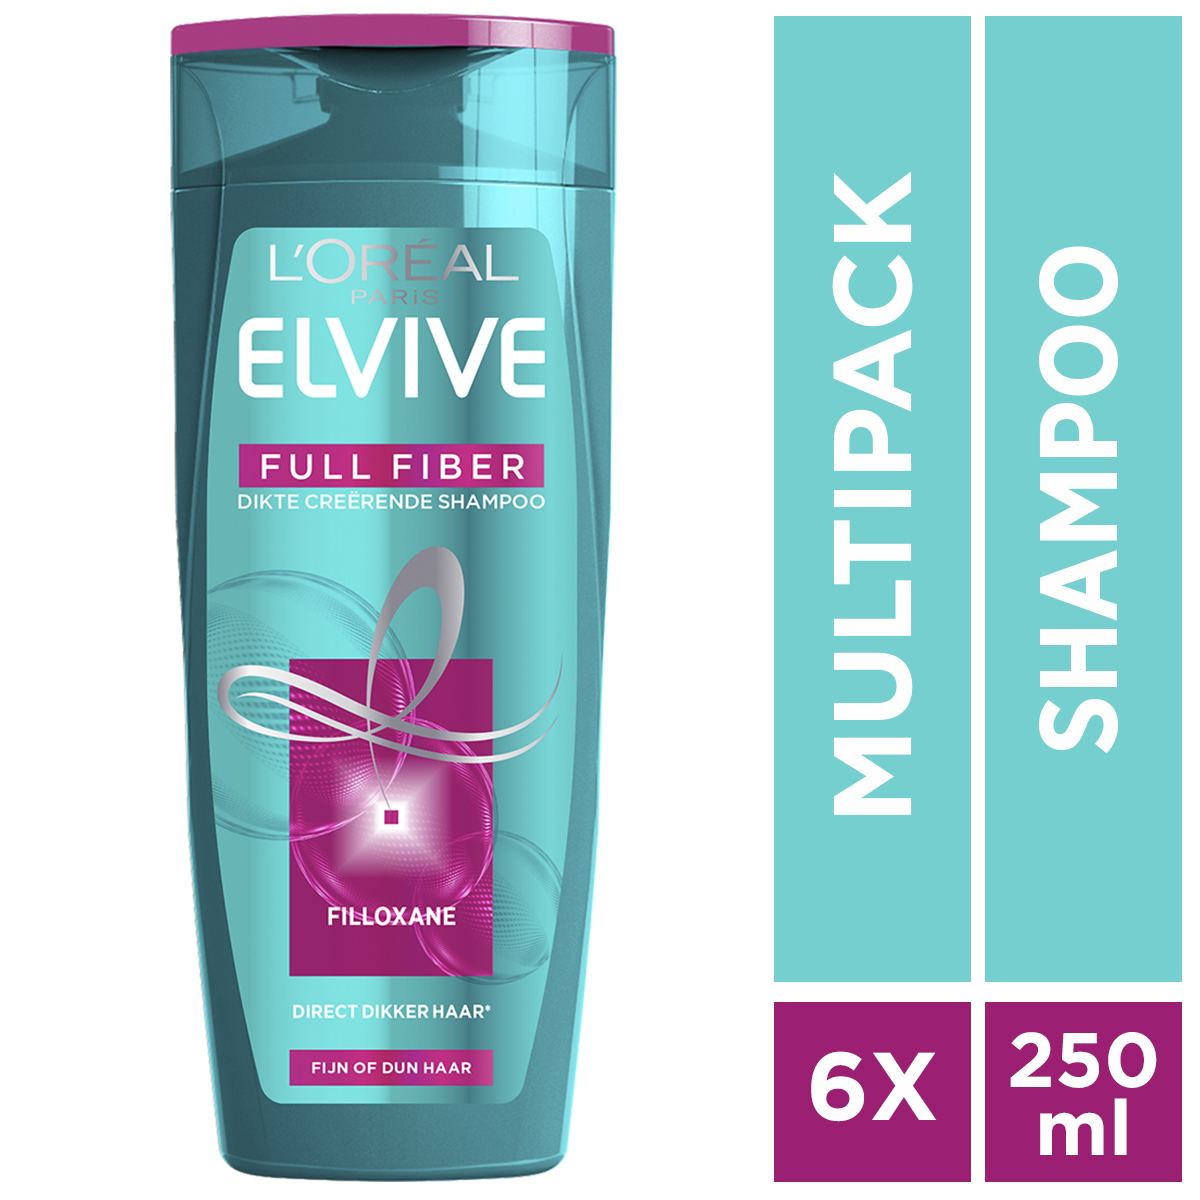 L'Oréal Elvive Full Fiber - 6x 250 ml - Shampoo